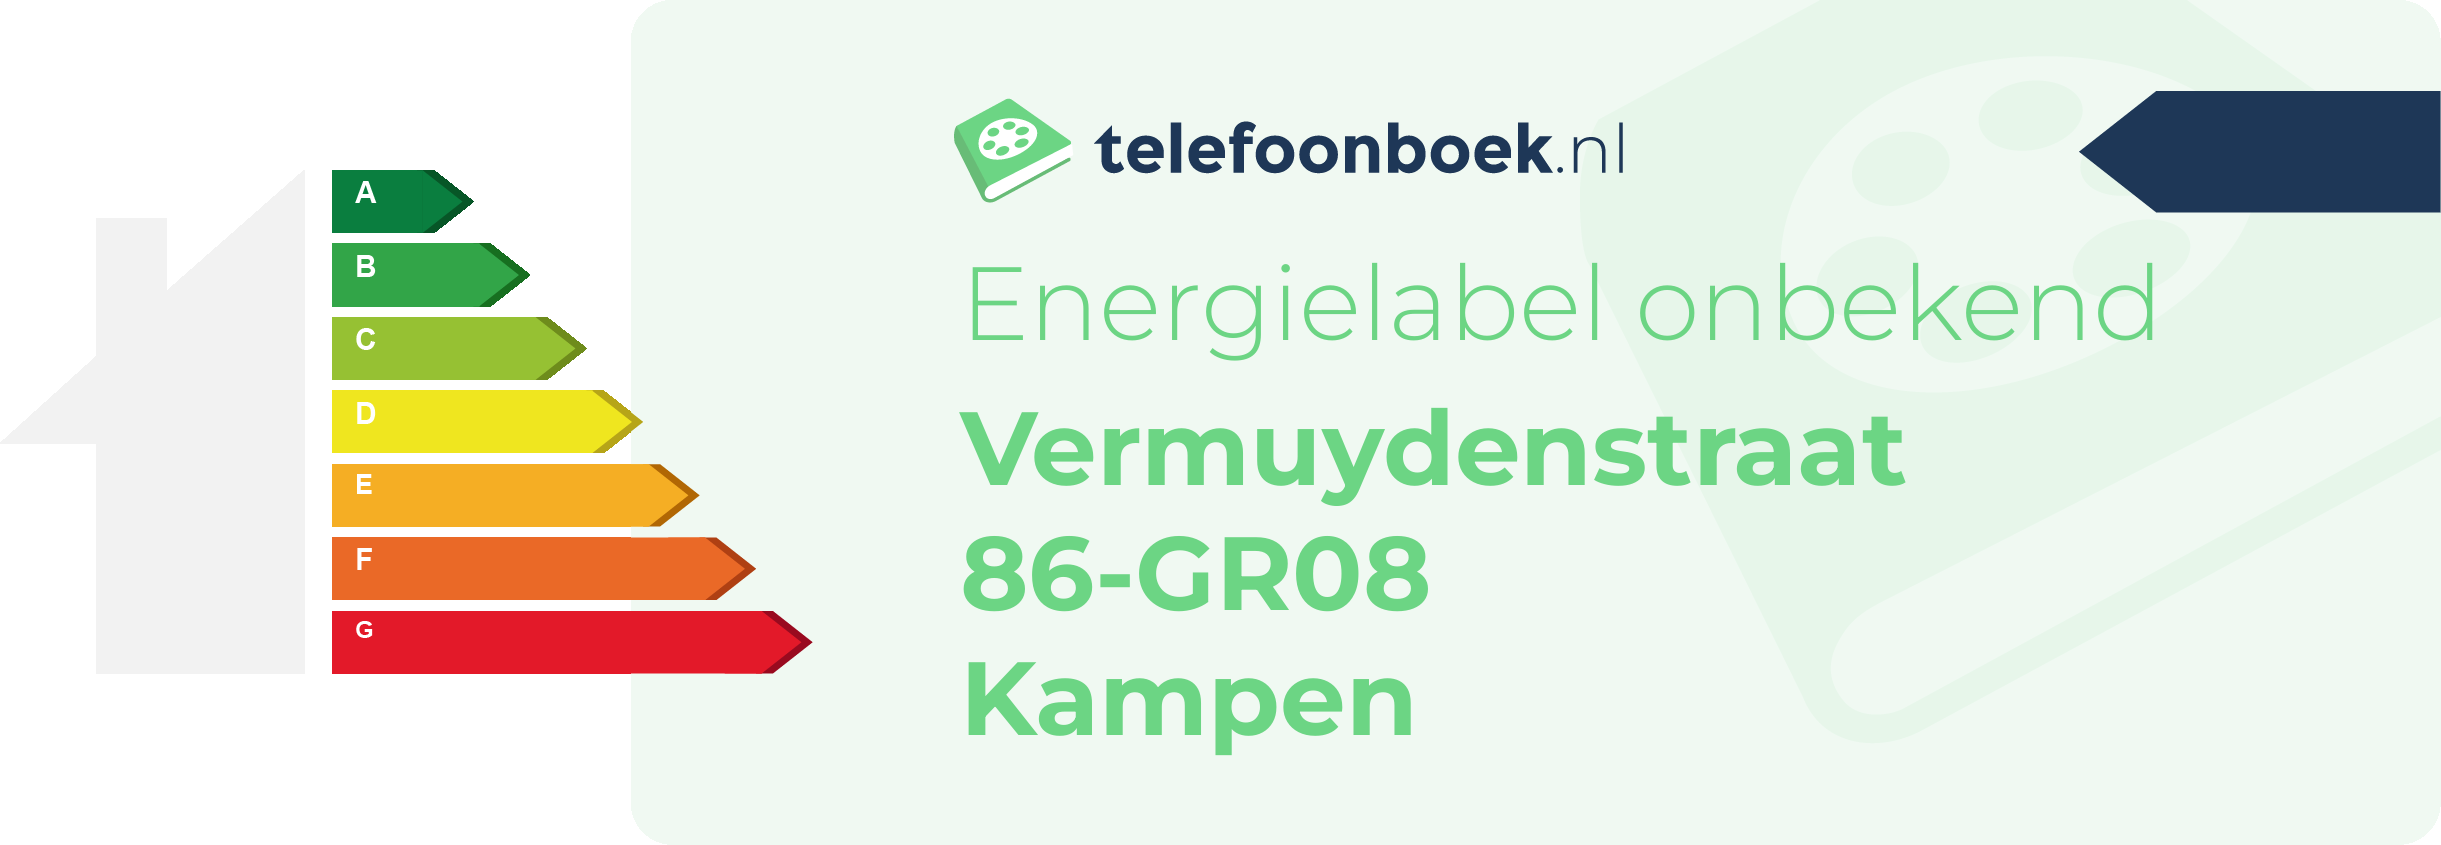 Energielabel Vermuydenstraat 86-GR08 Kampen